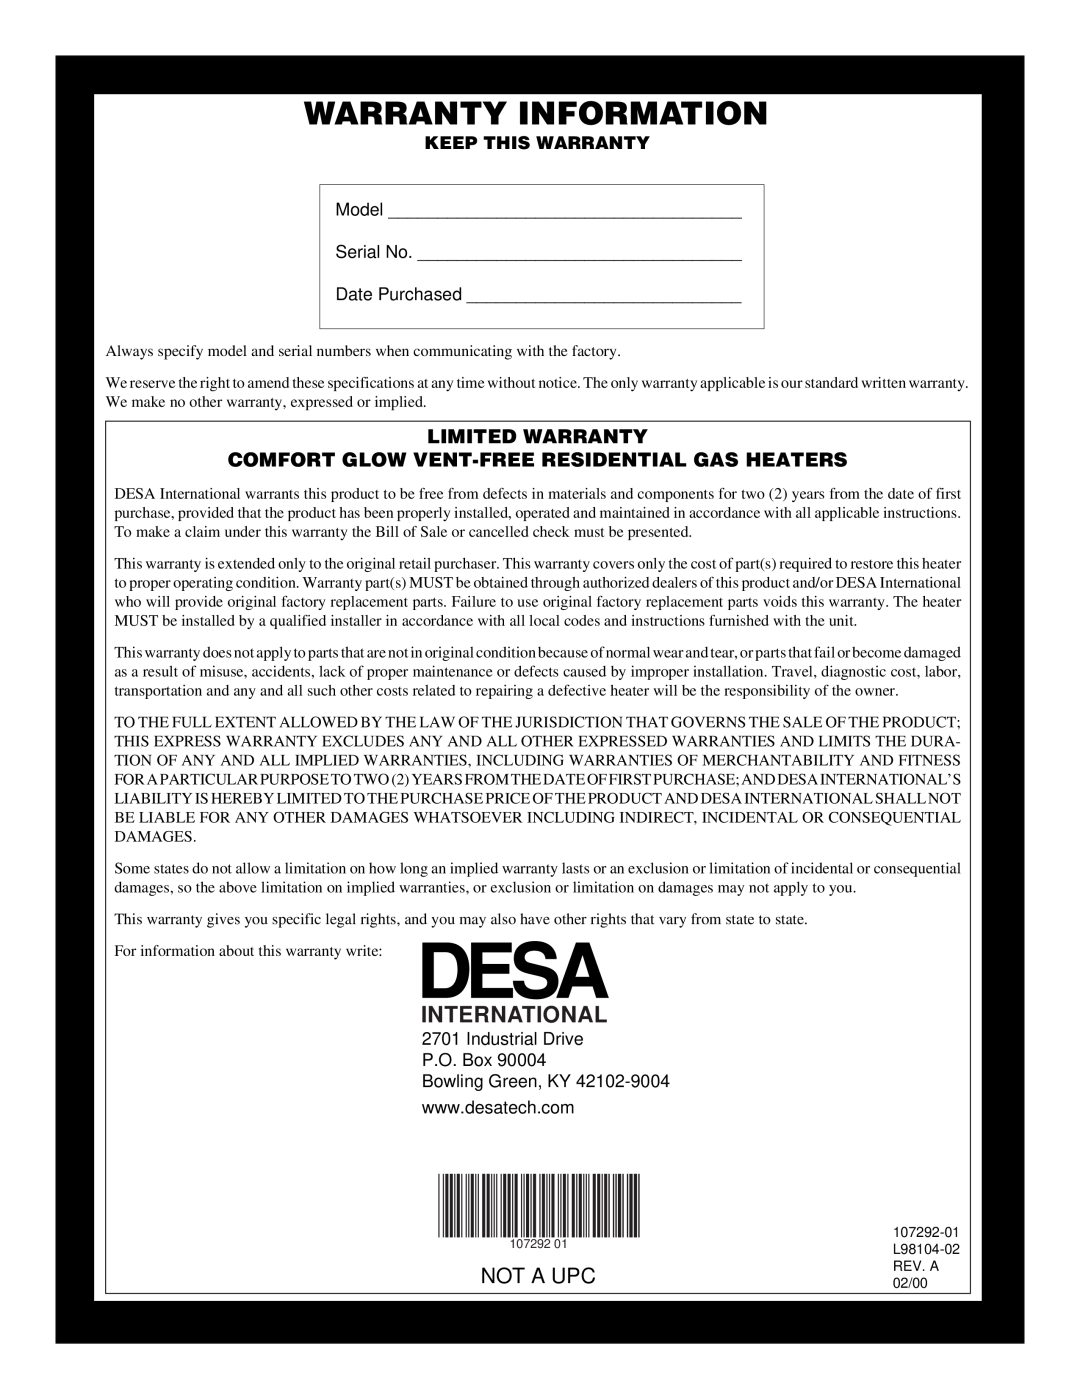 Desa CGR2N installation manual Warranty Information, International, Not A Upc, Model Serial No Date Purchased 